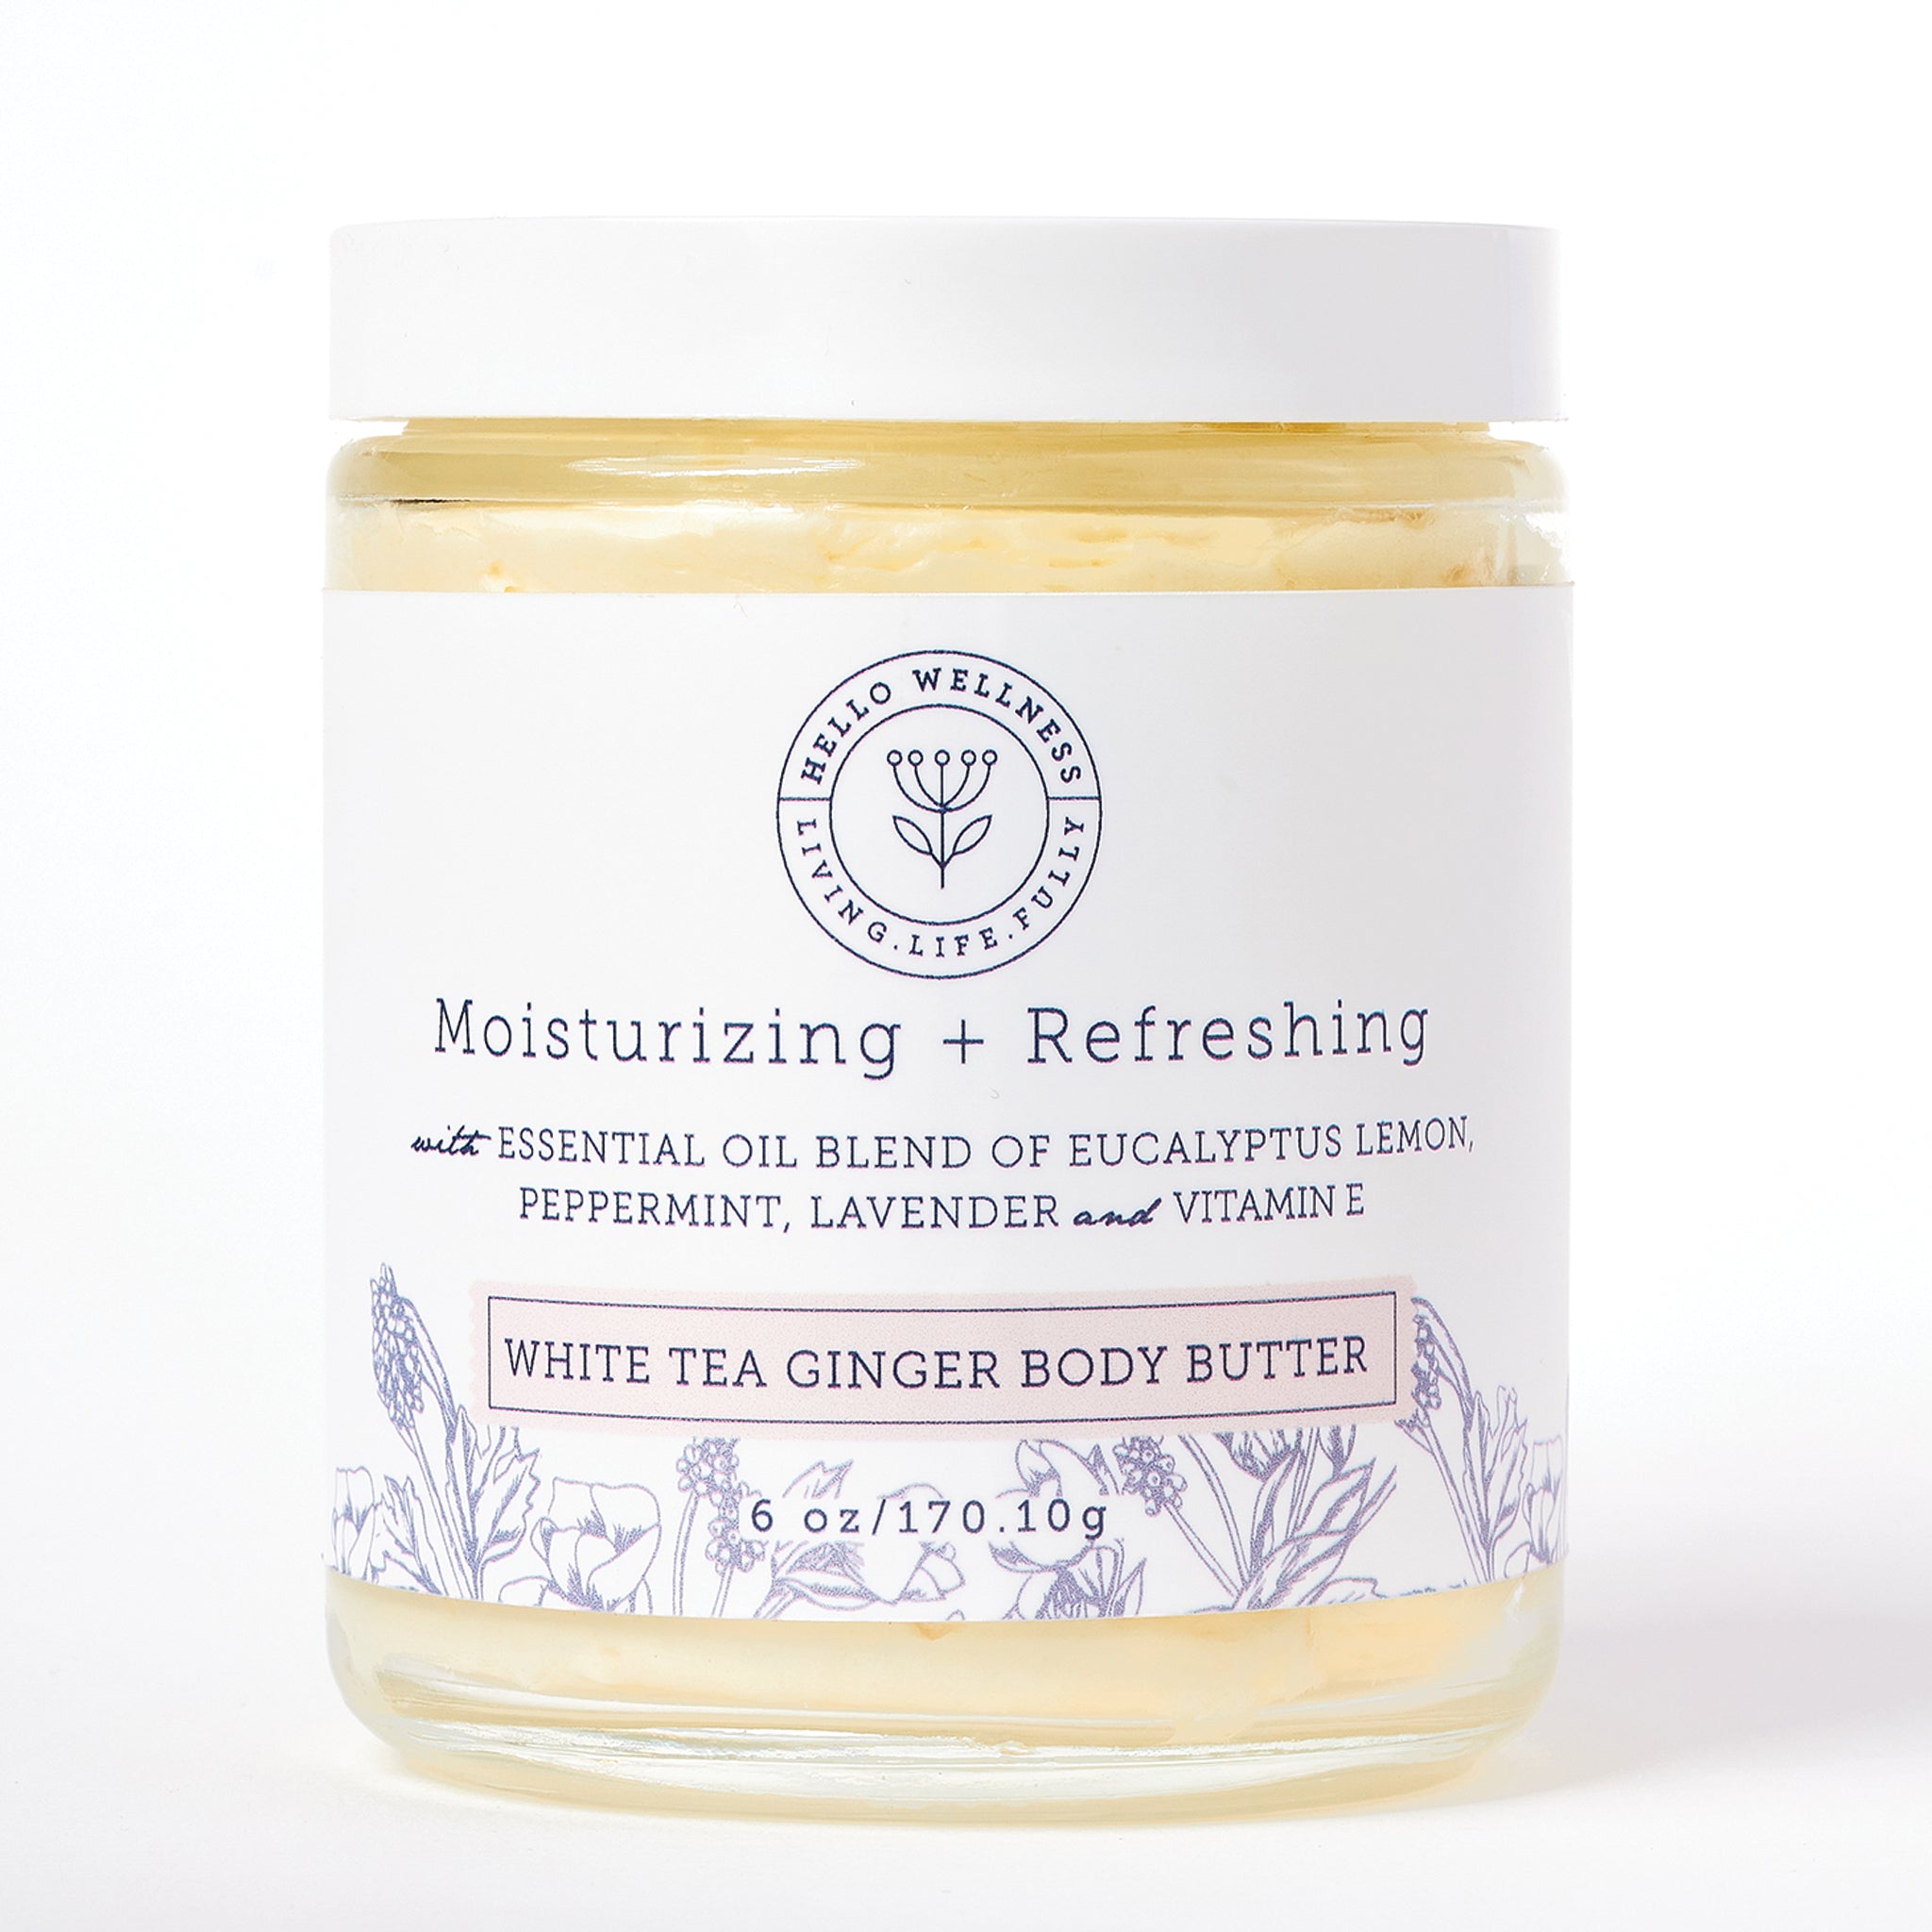 Moisturizing  + Refreshing Body Butter 6 oz. Moisturize & nourish dry skin, minimize the appearance of scars, dark spots.